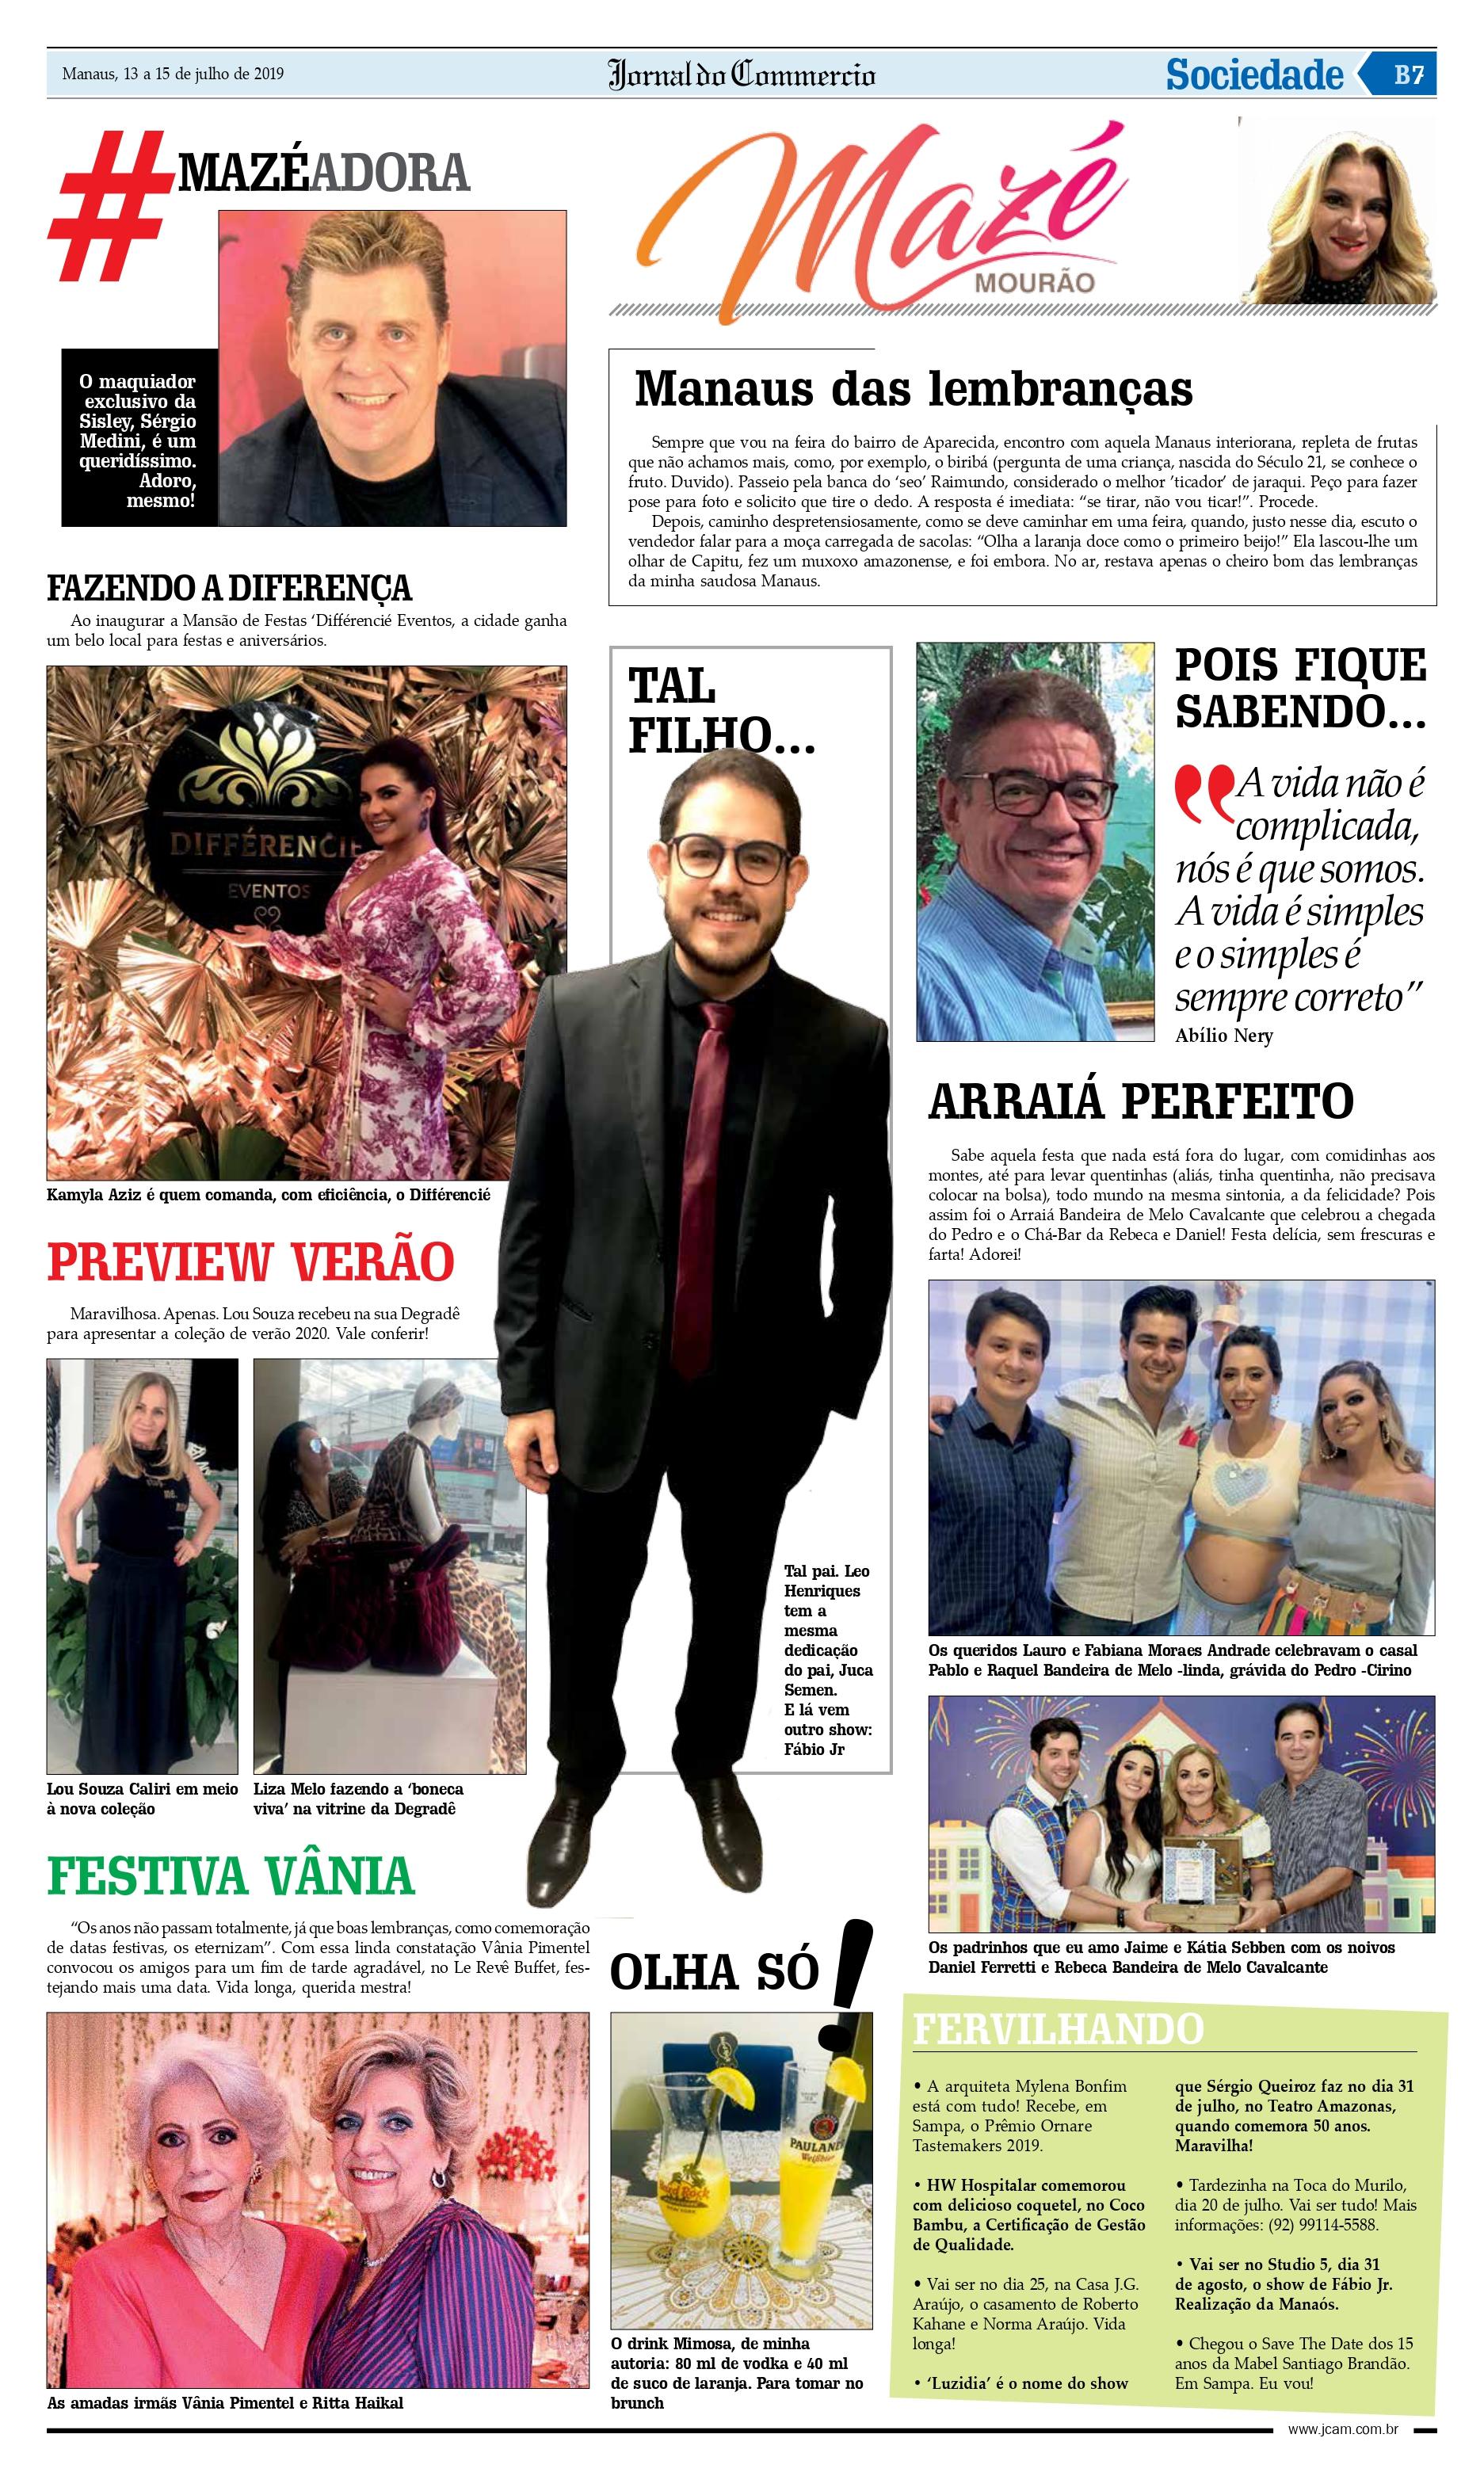 Mazé no Jornal do Commercio